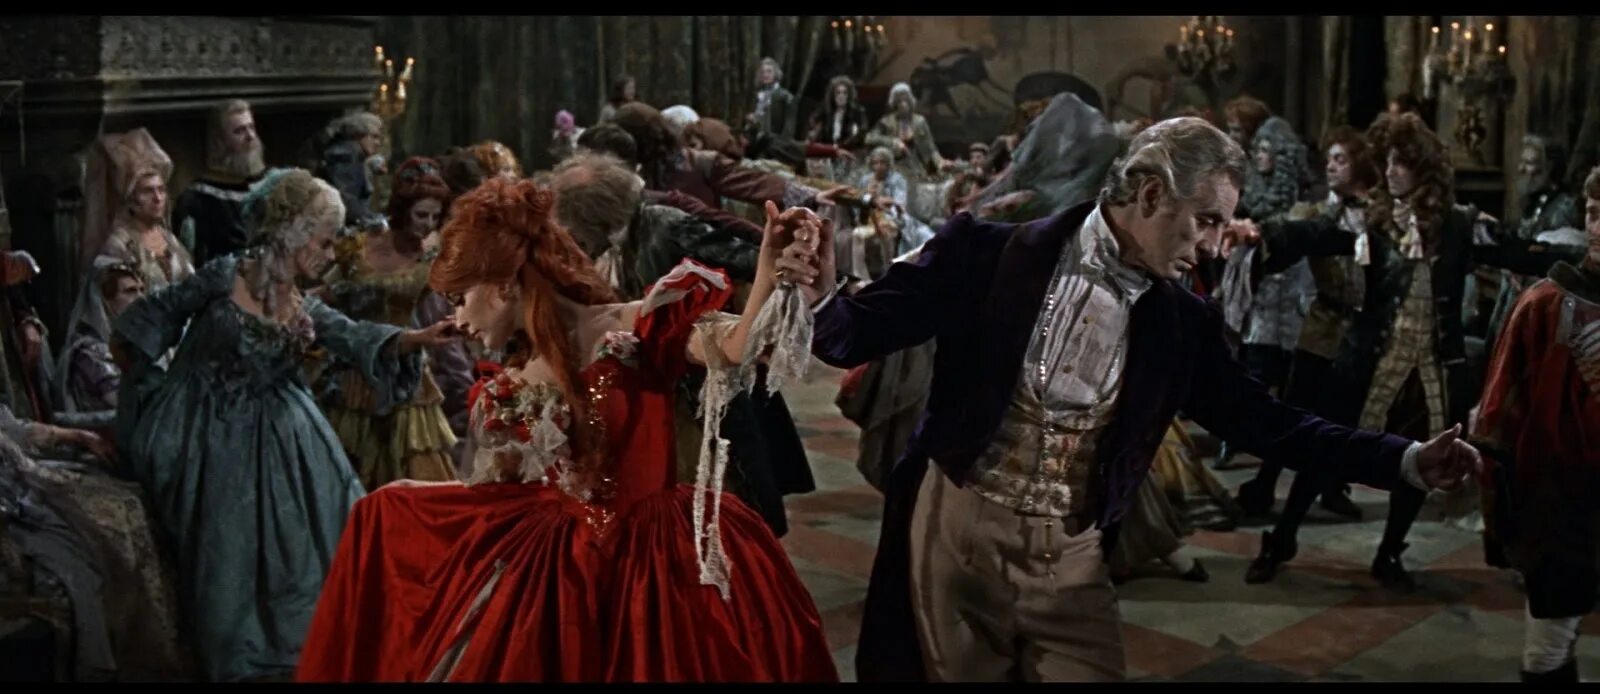 Бал вампиров Dance of the Vampires, 1967. Конец бала вампиров